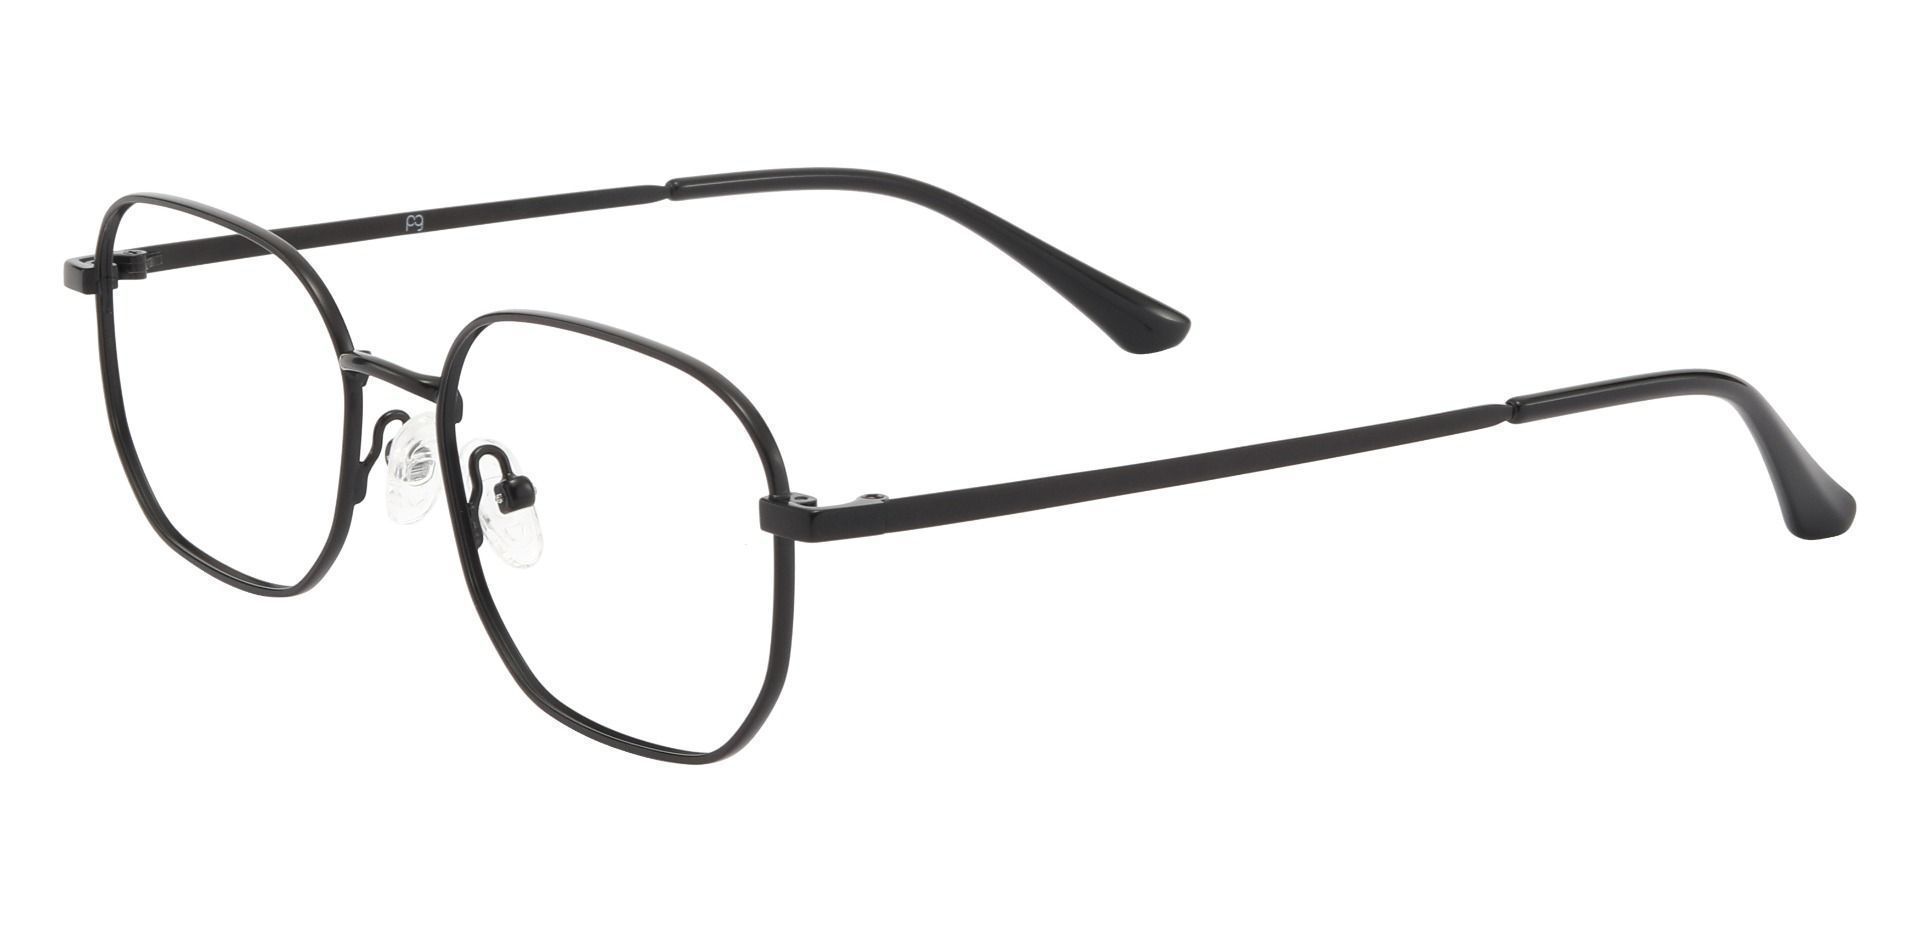 Euclid Geometric Eyeglasses Frame - Black